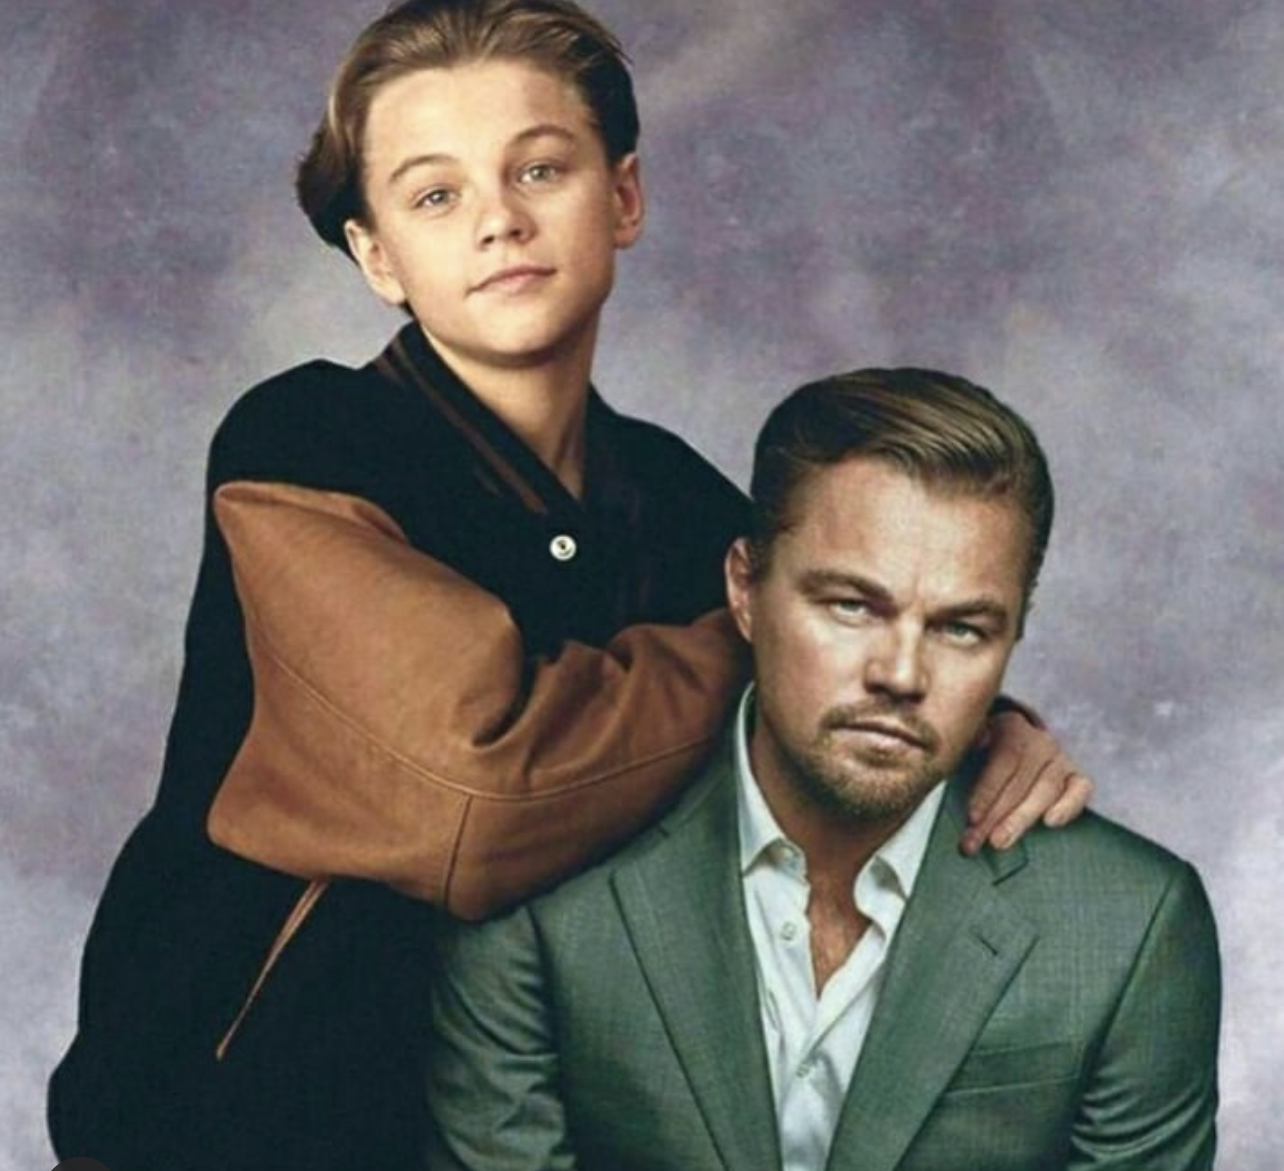 Leonardo Di Caprio: Ο αμετανόητος bachelor έγινε 47!